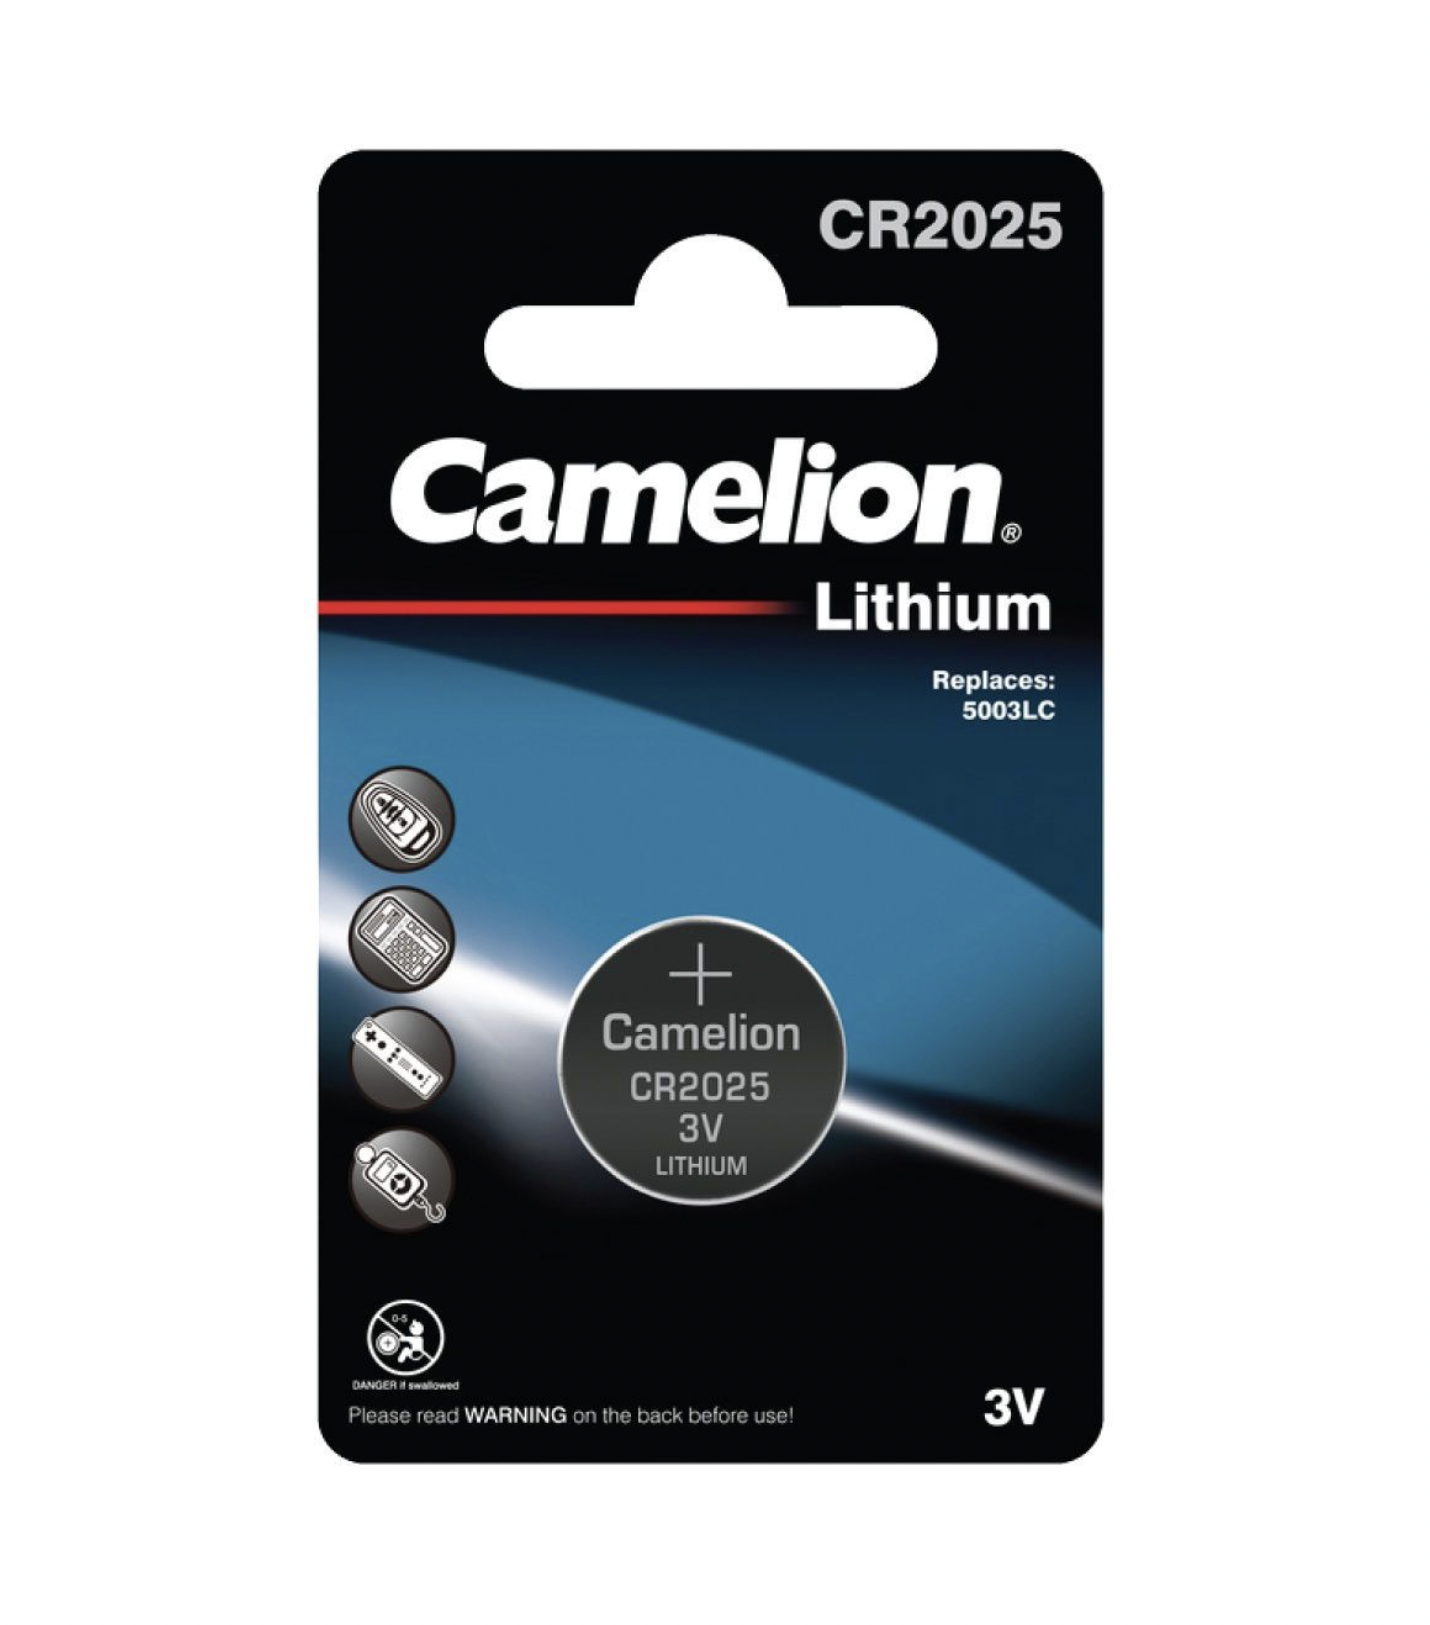   / Camelion CR2025-BP1 -  Lithium 3V 5003LC  1 